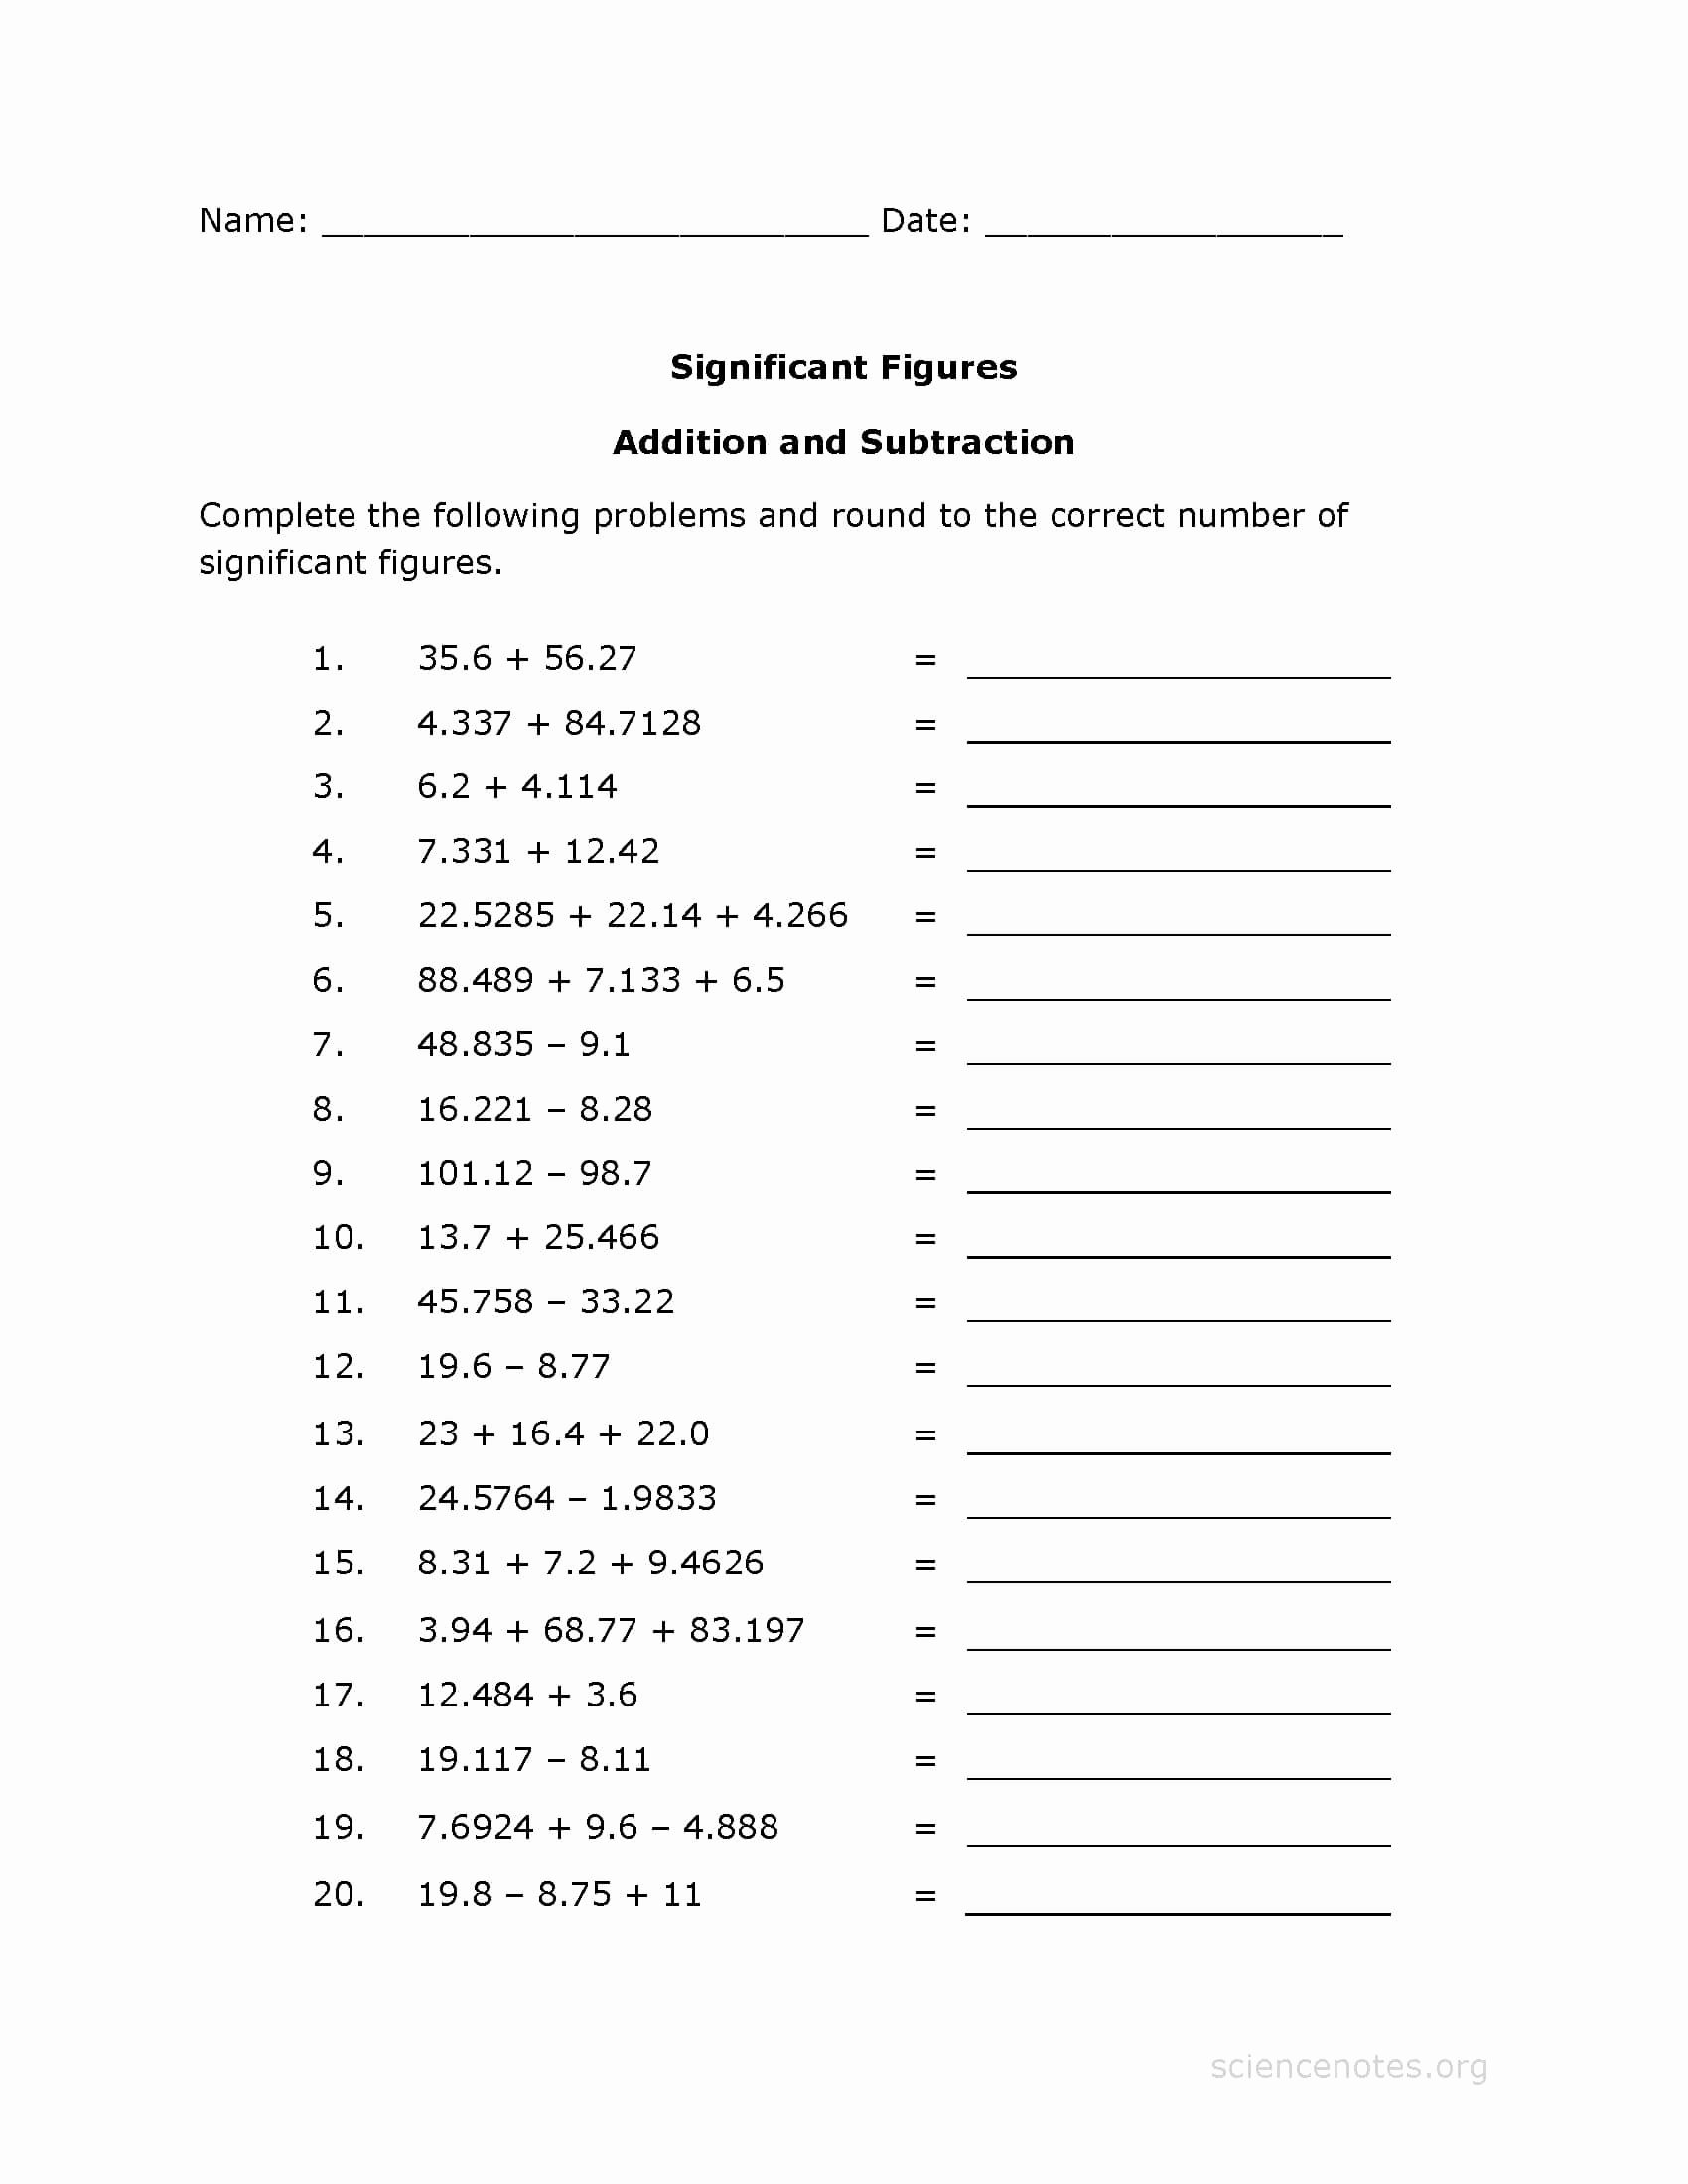 Significant Figures Practice Worksheet Beautiful Significant Figures Worksheet Pdf Addition Practice